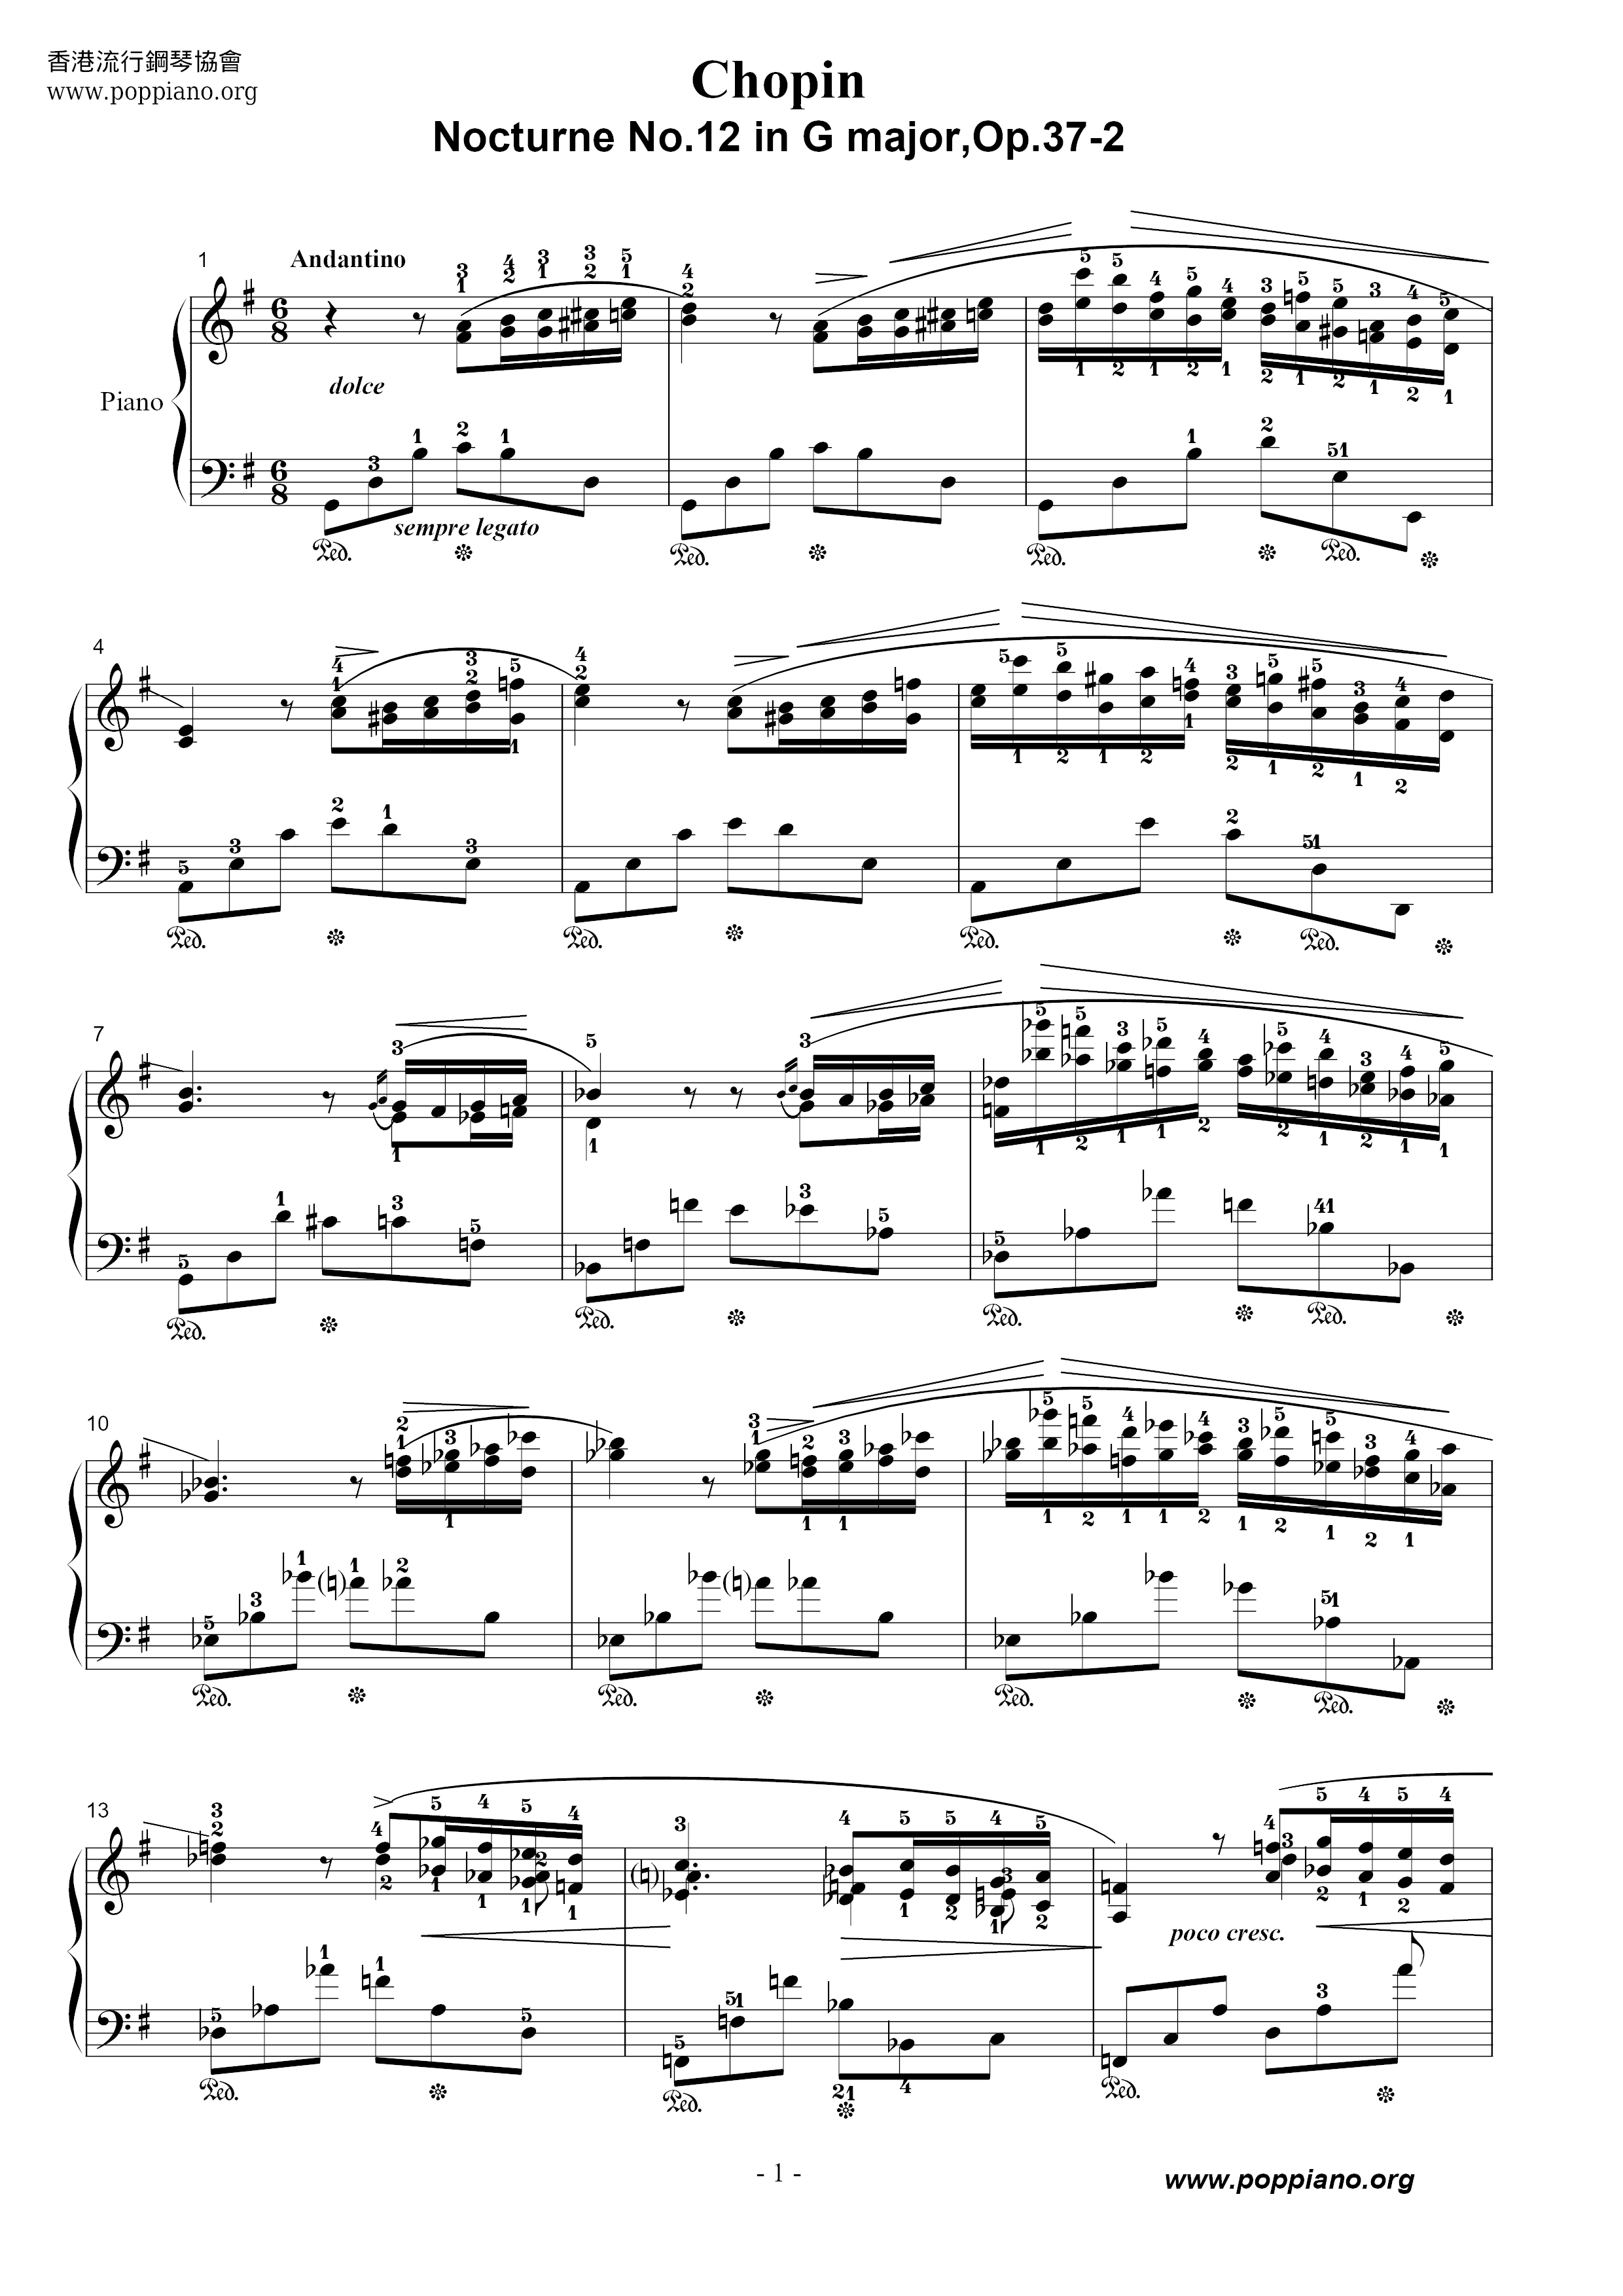 Nocturne No. 12ピアノ譜